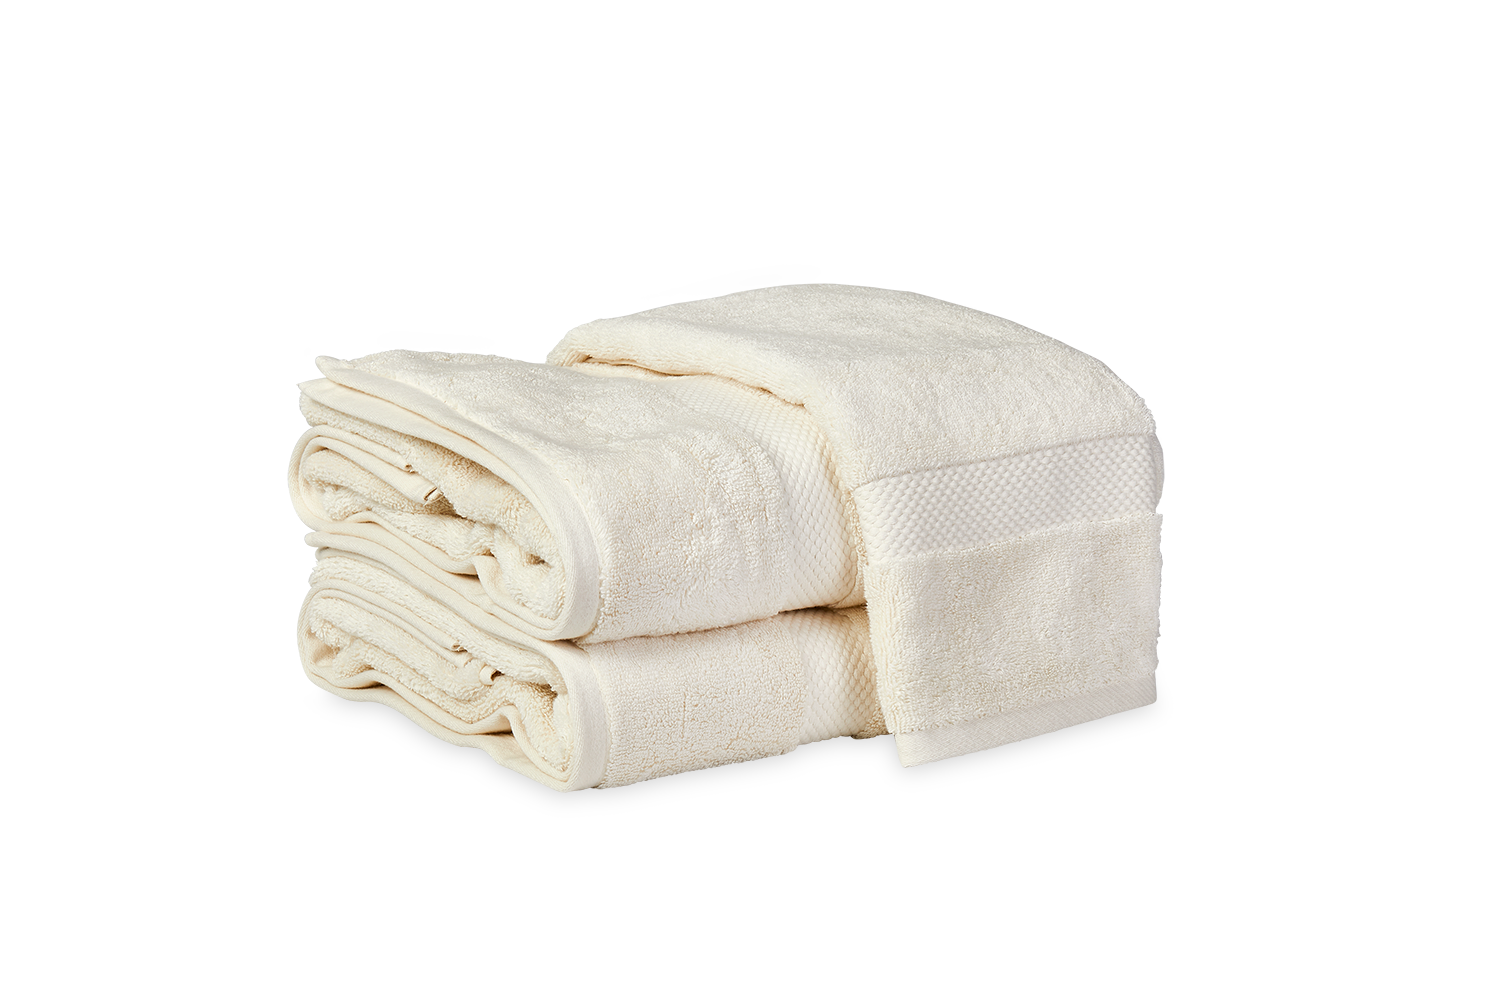 Matouk Guesthouse Towels